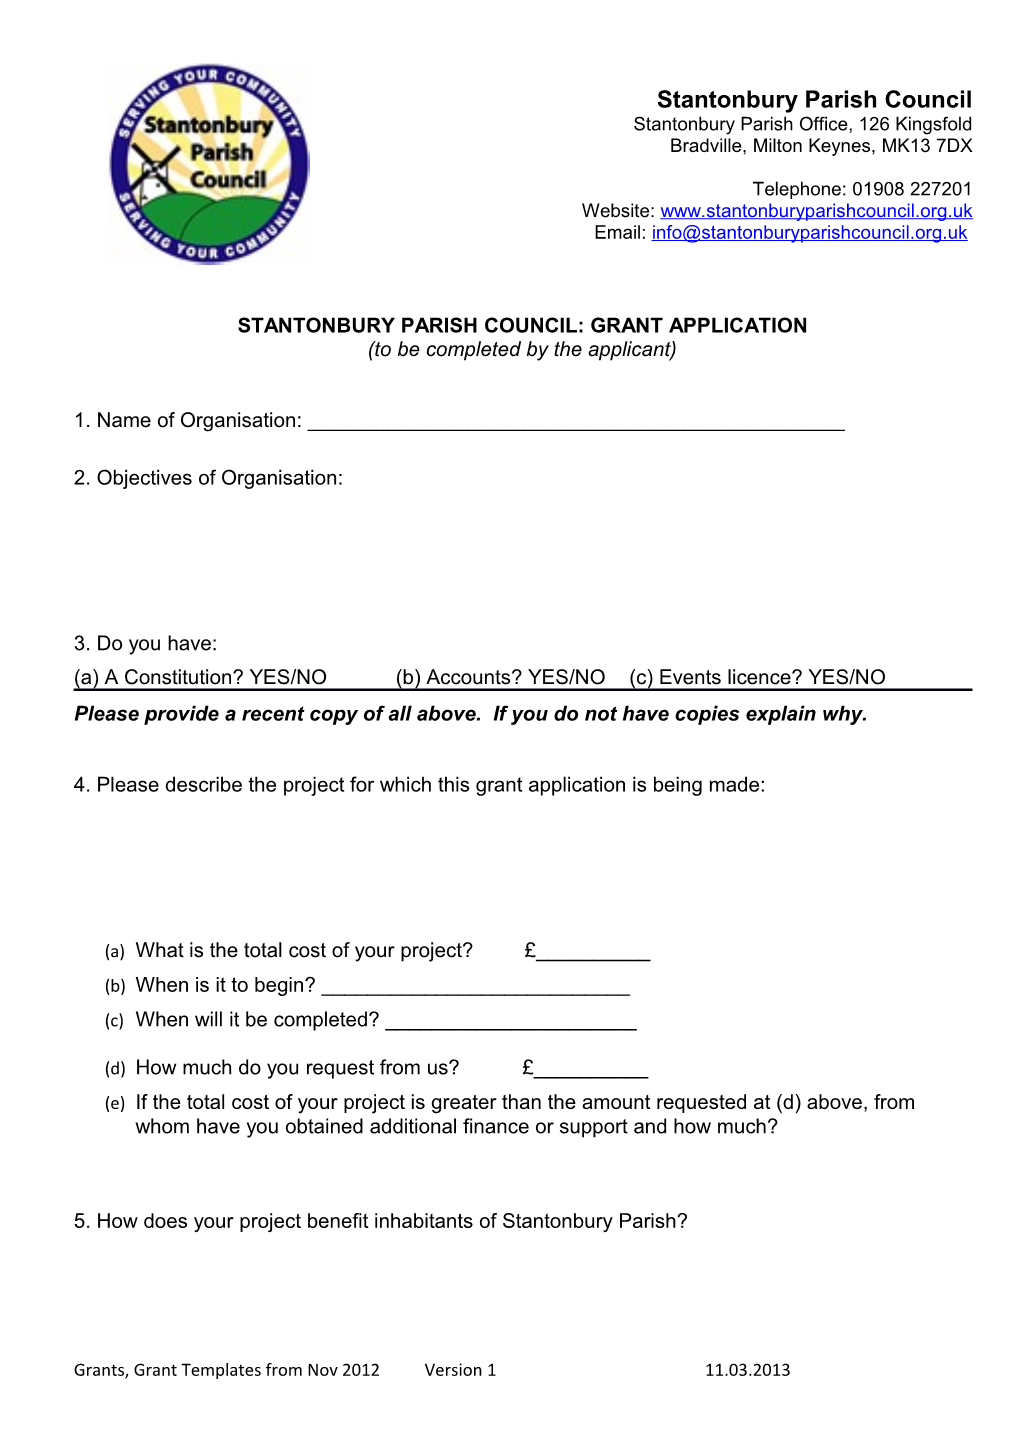 Stantonbury Parish Council: Grant Application